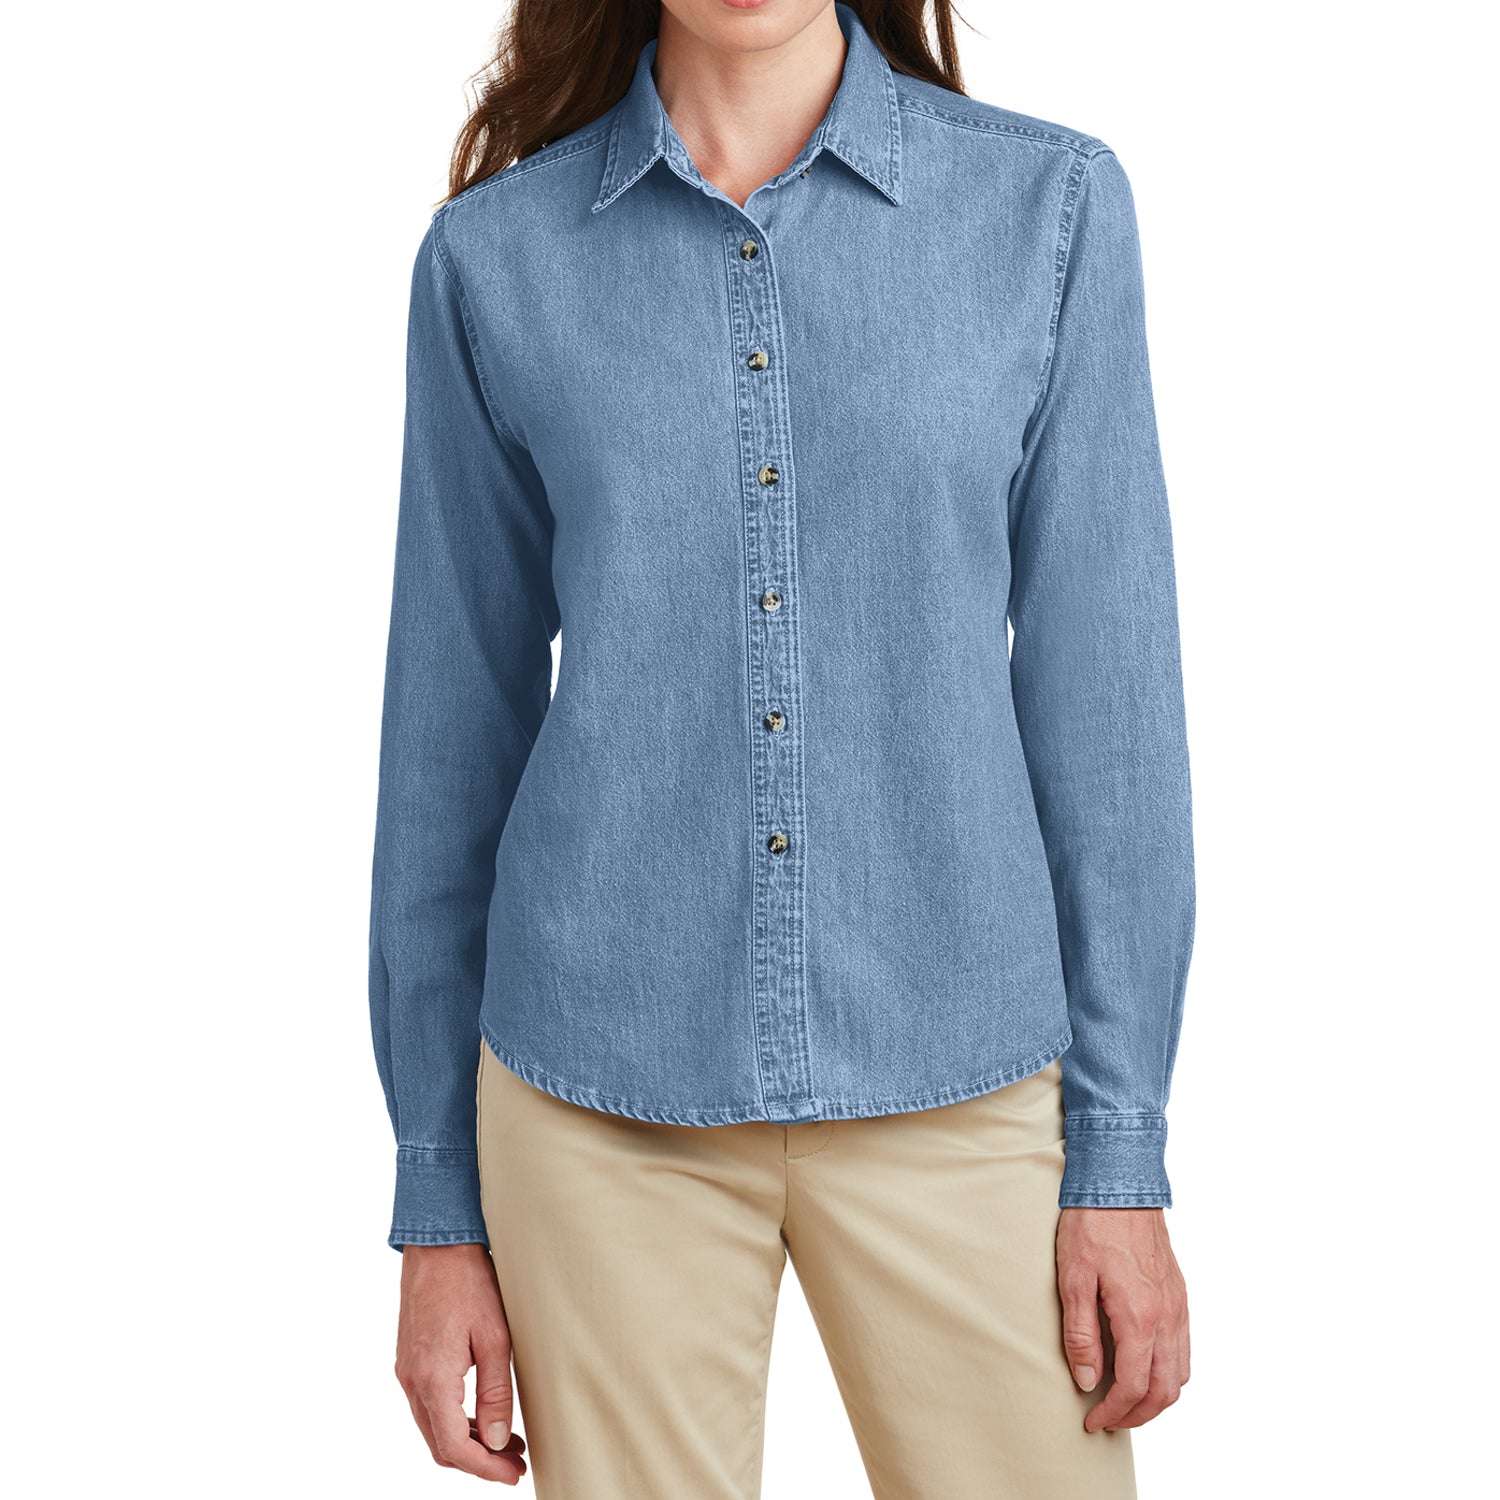 Mafoose Women's Long Sleeve Value Denim Shirt Faded Blue-Front